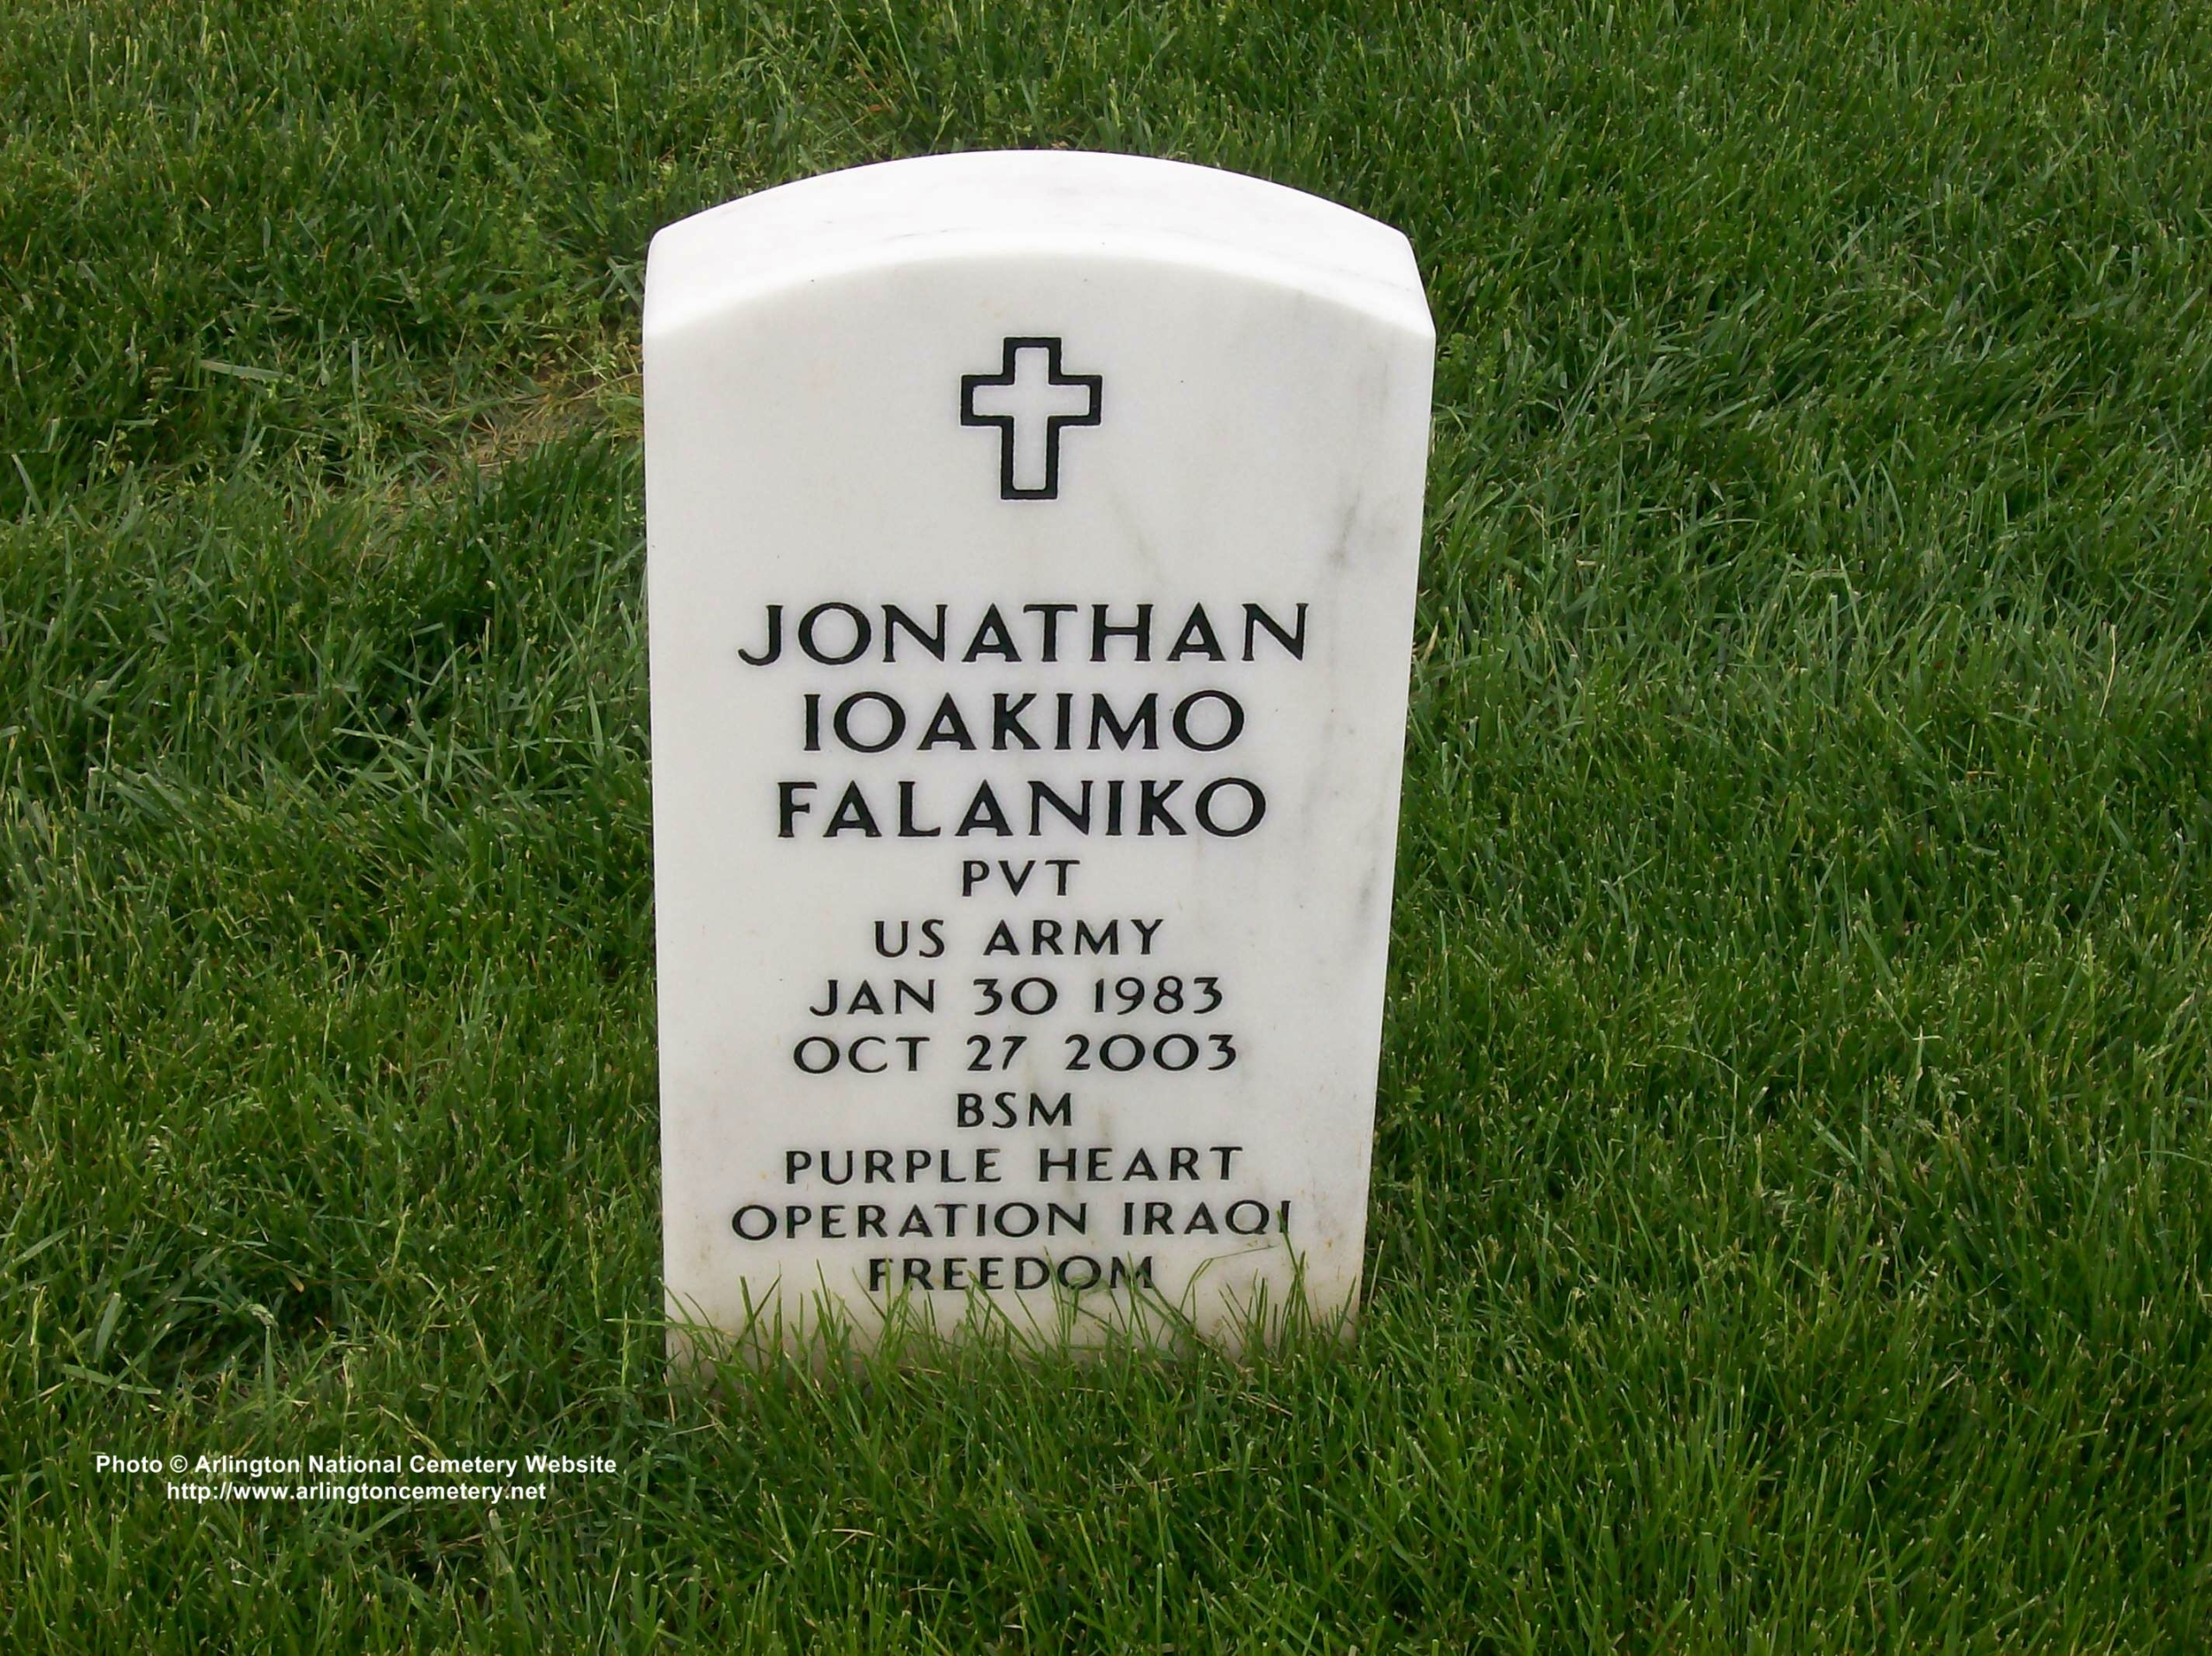 jifalaniko-gravesite-photo-may-2008-001